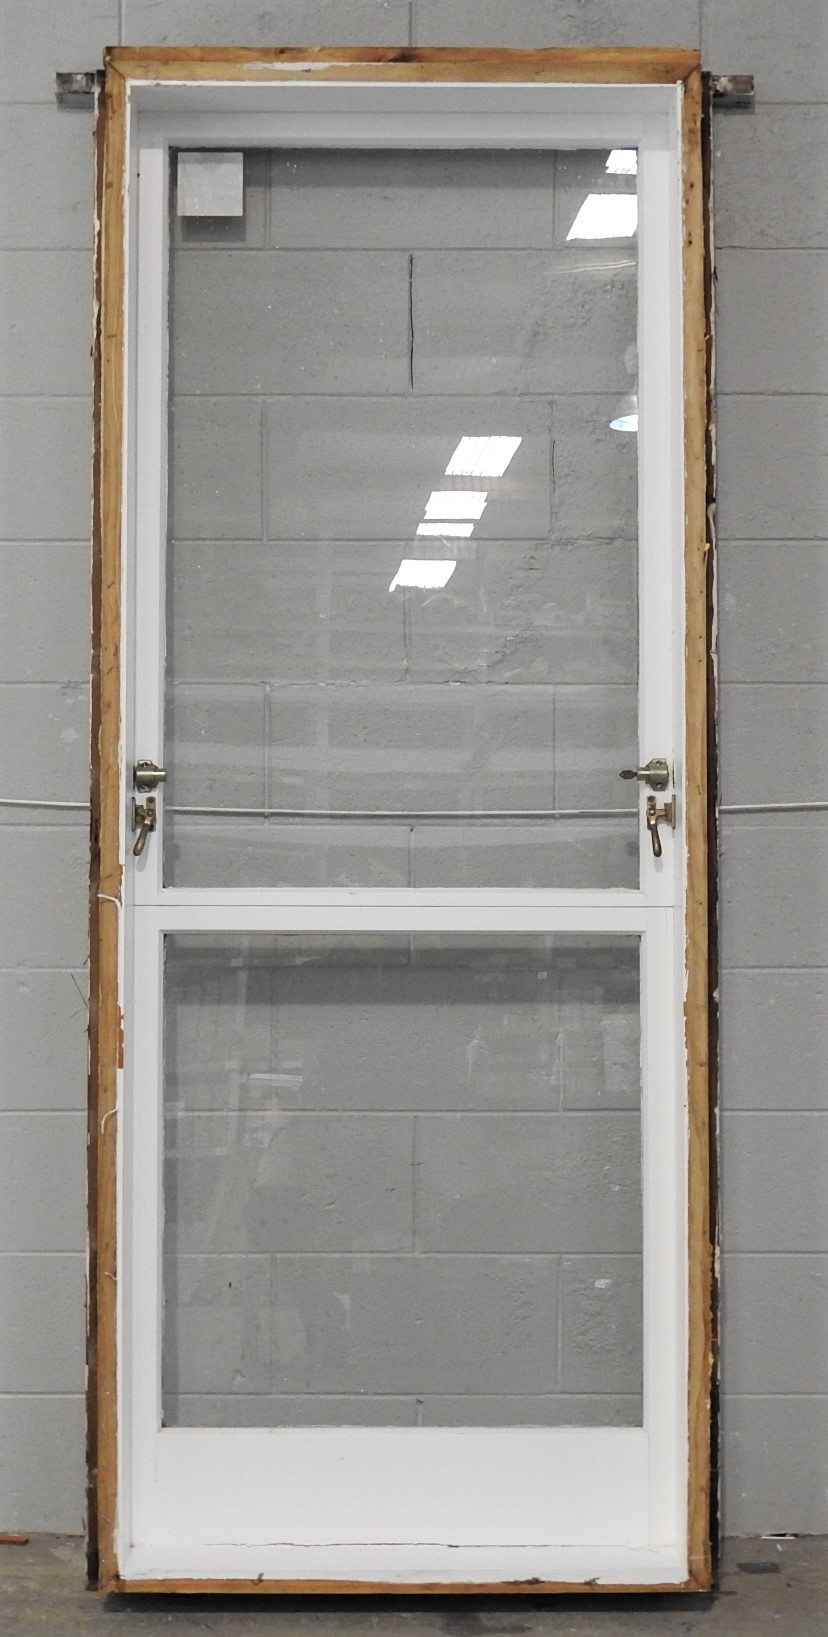 Wooden Single Awning Portrait Window